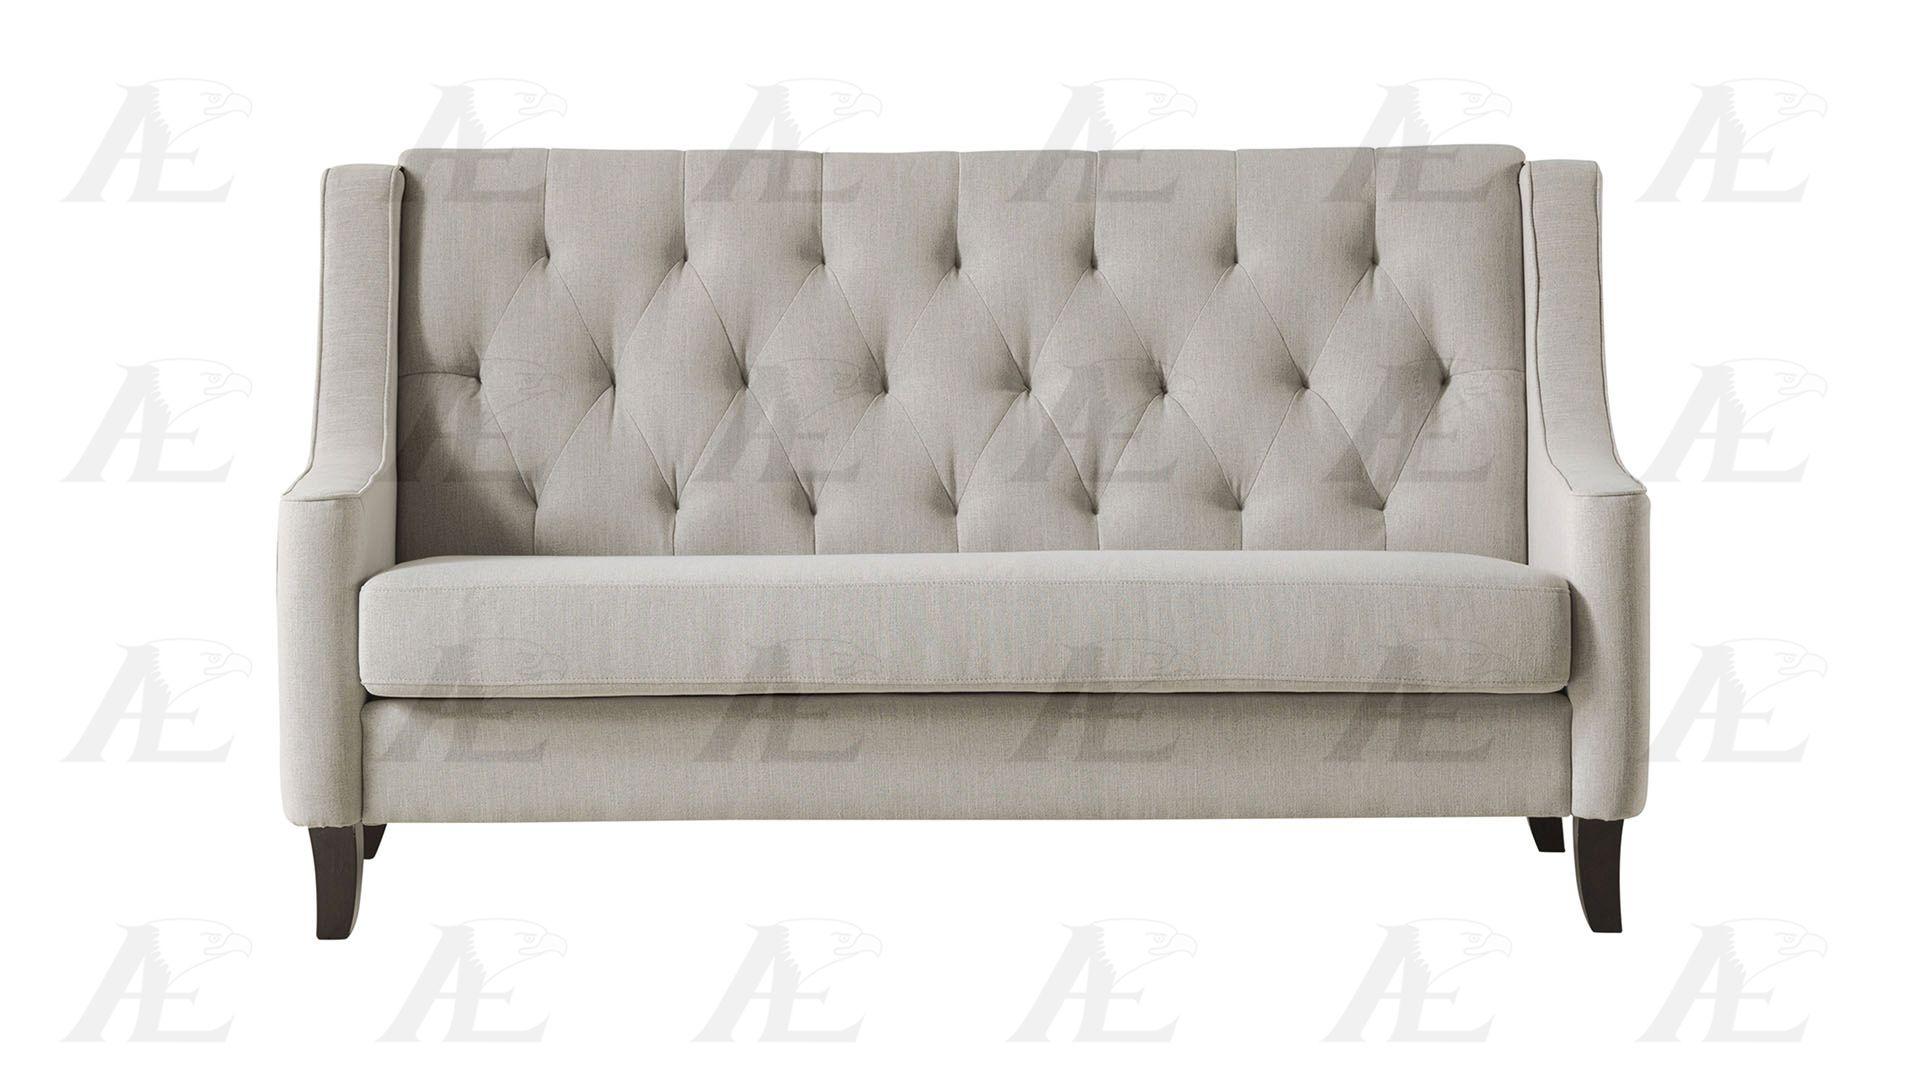 

                    
American Eagle Furniture AE2372-LG Sofa and Loveseat Set Light Gray Fabric Purchase 
